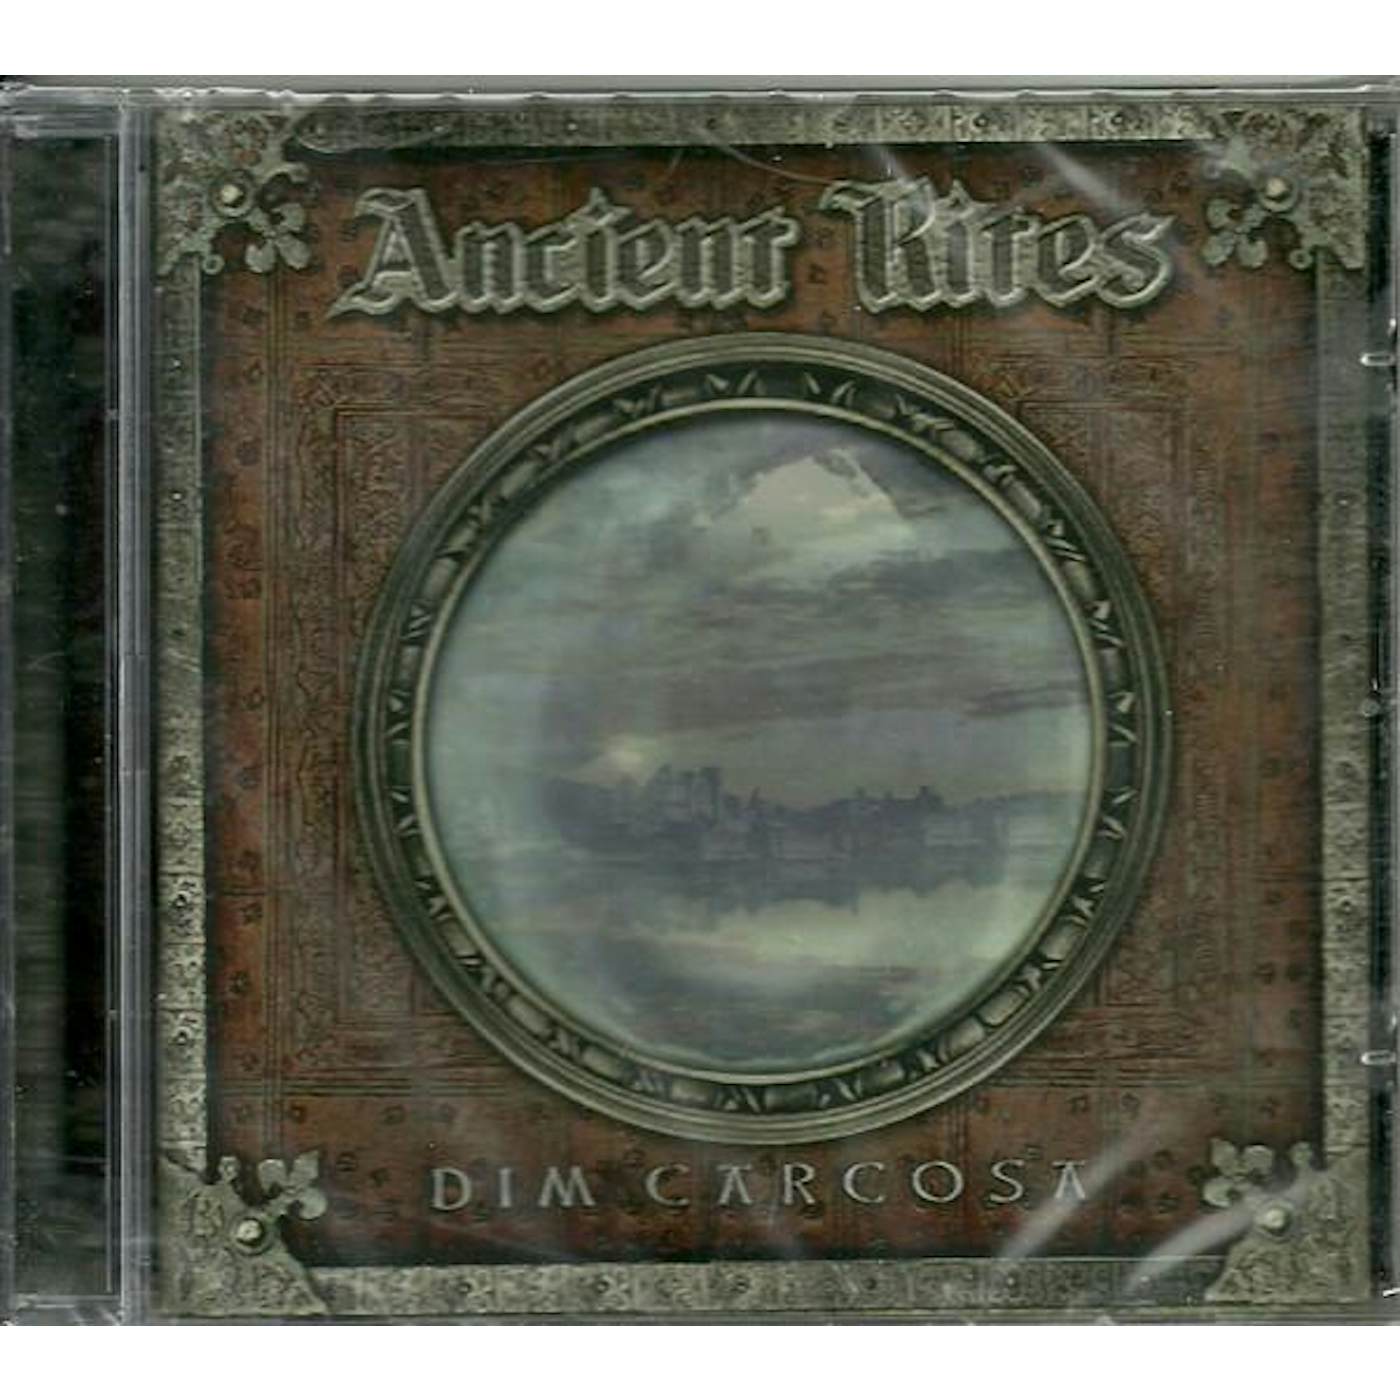 Ancient Rites DIM CARDOSA CD